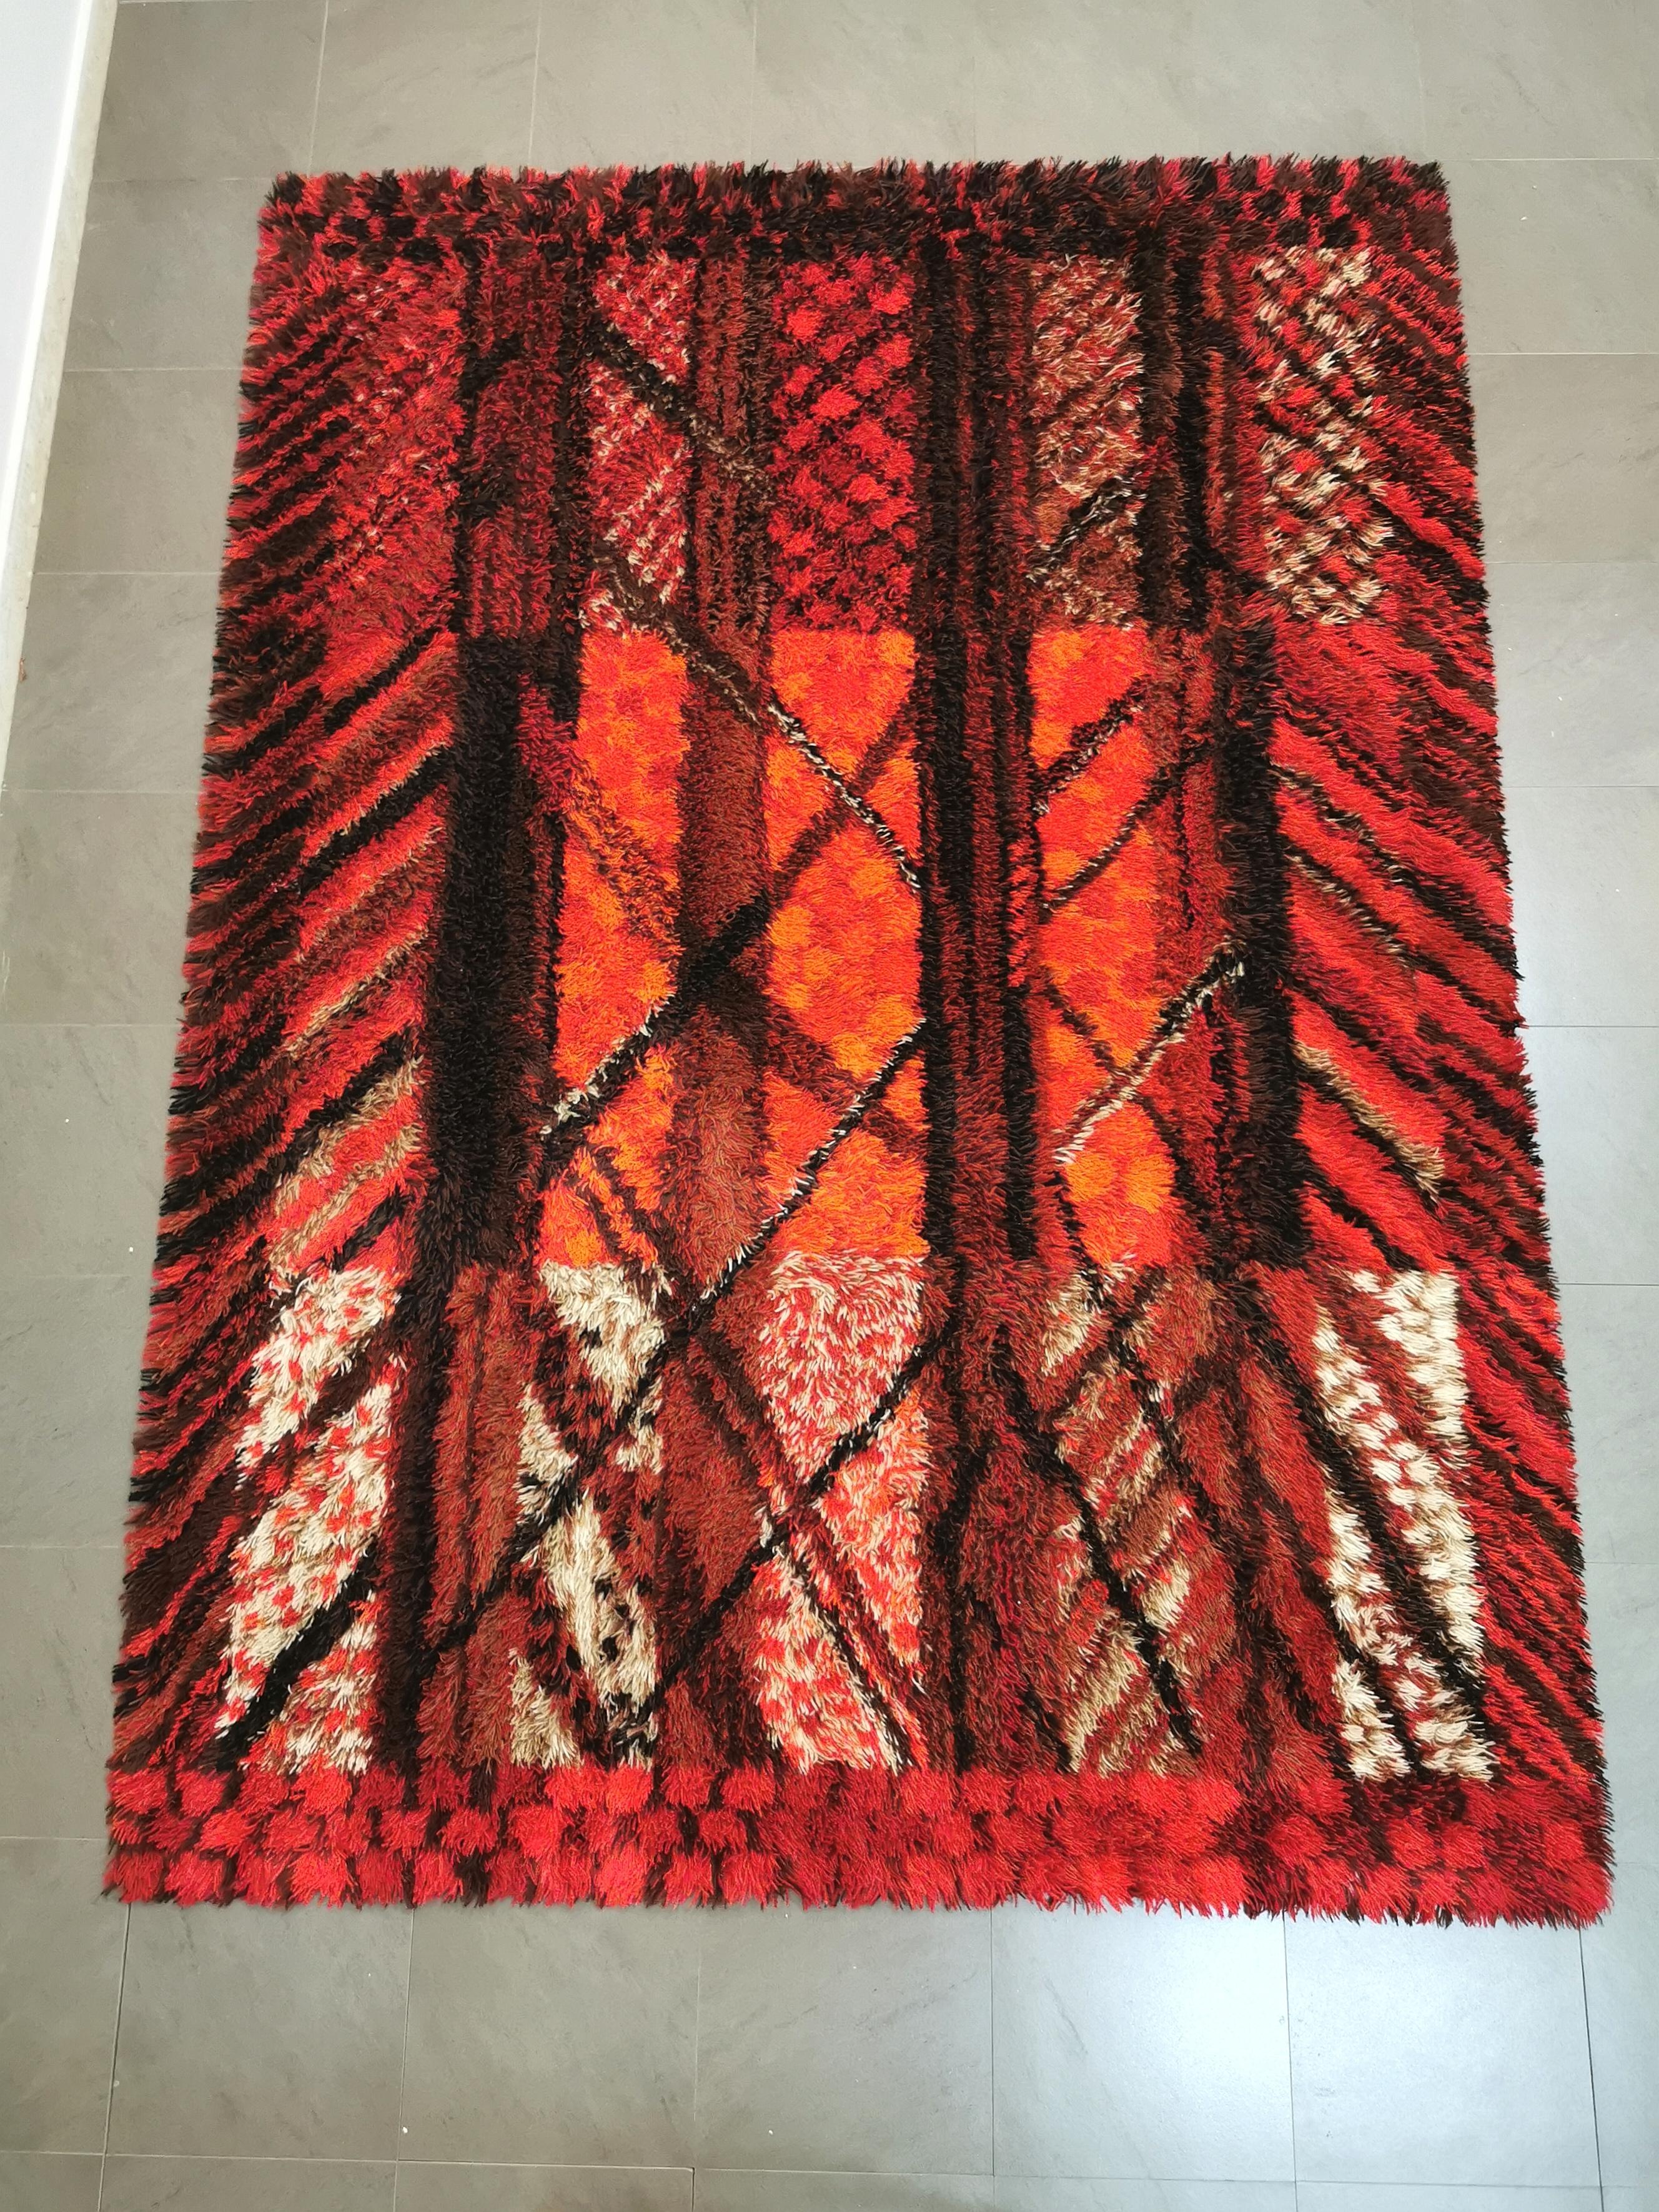 Midcentury Wool Red Black Large Carpet Rya Rug by Marianne Richter Sweden 1960s For Sale 1